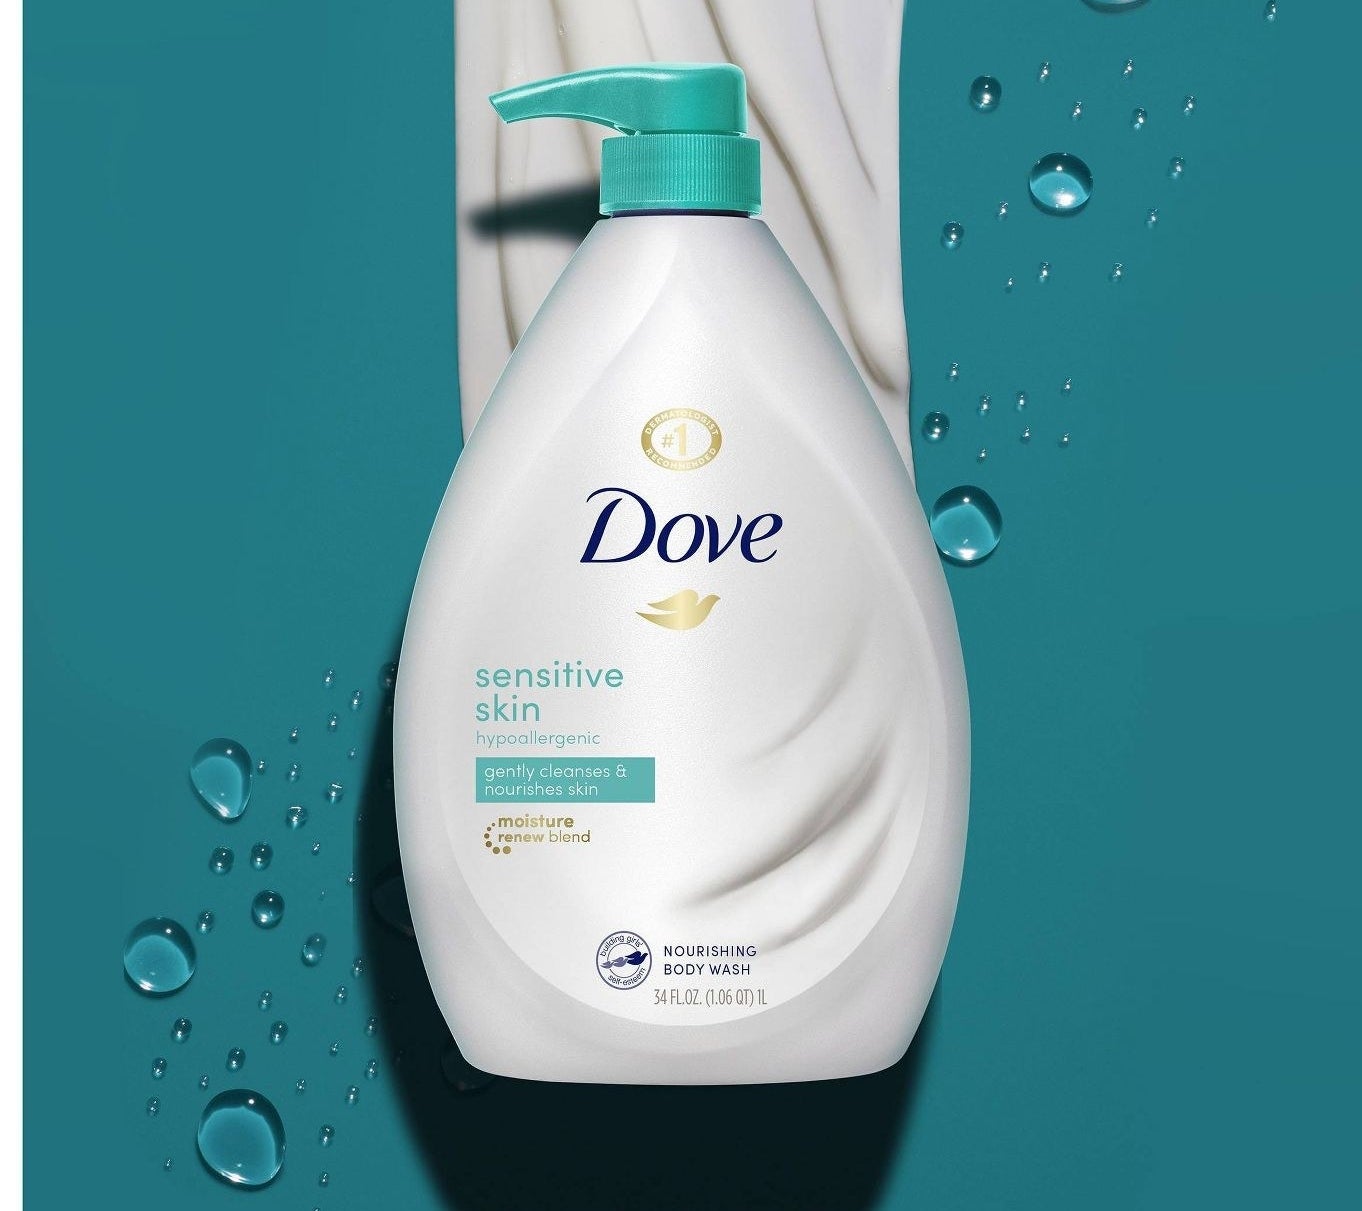 The Dove Sensitive Skin Hypoallergenic and Sulfate-Free Body Wash